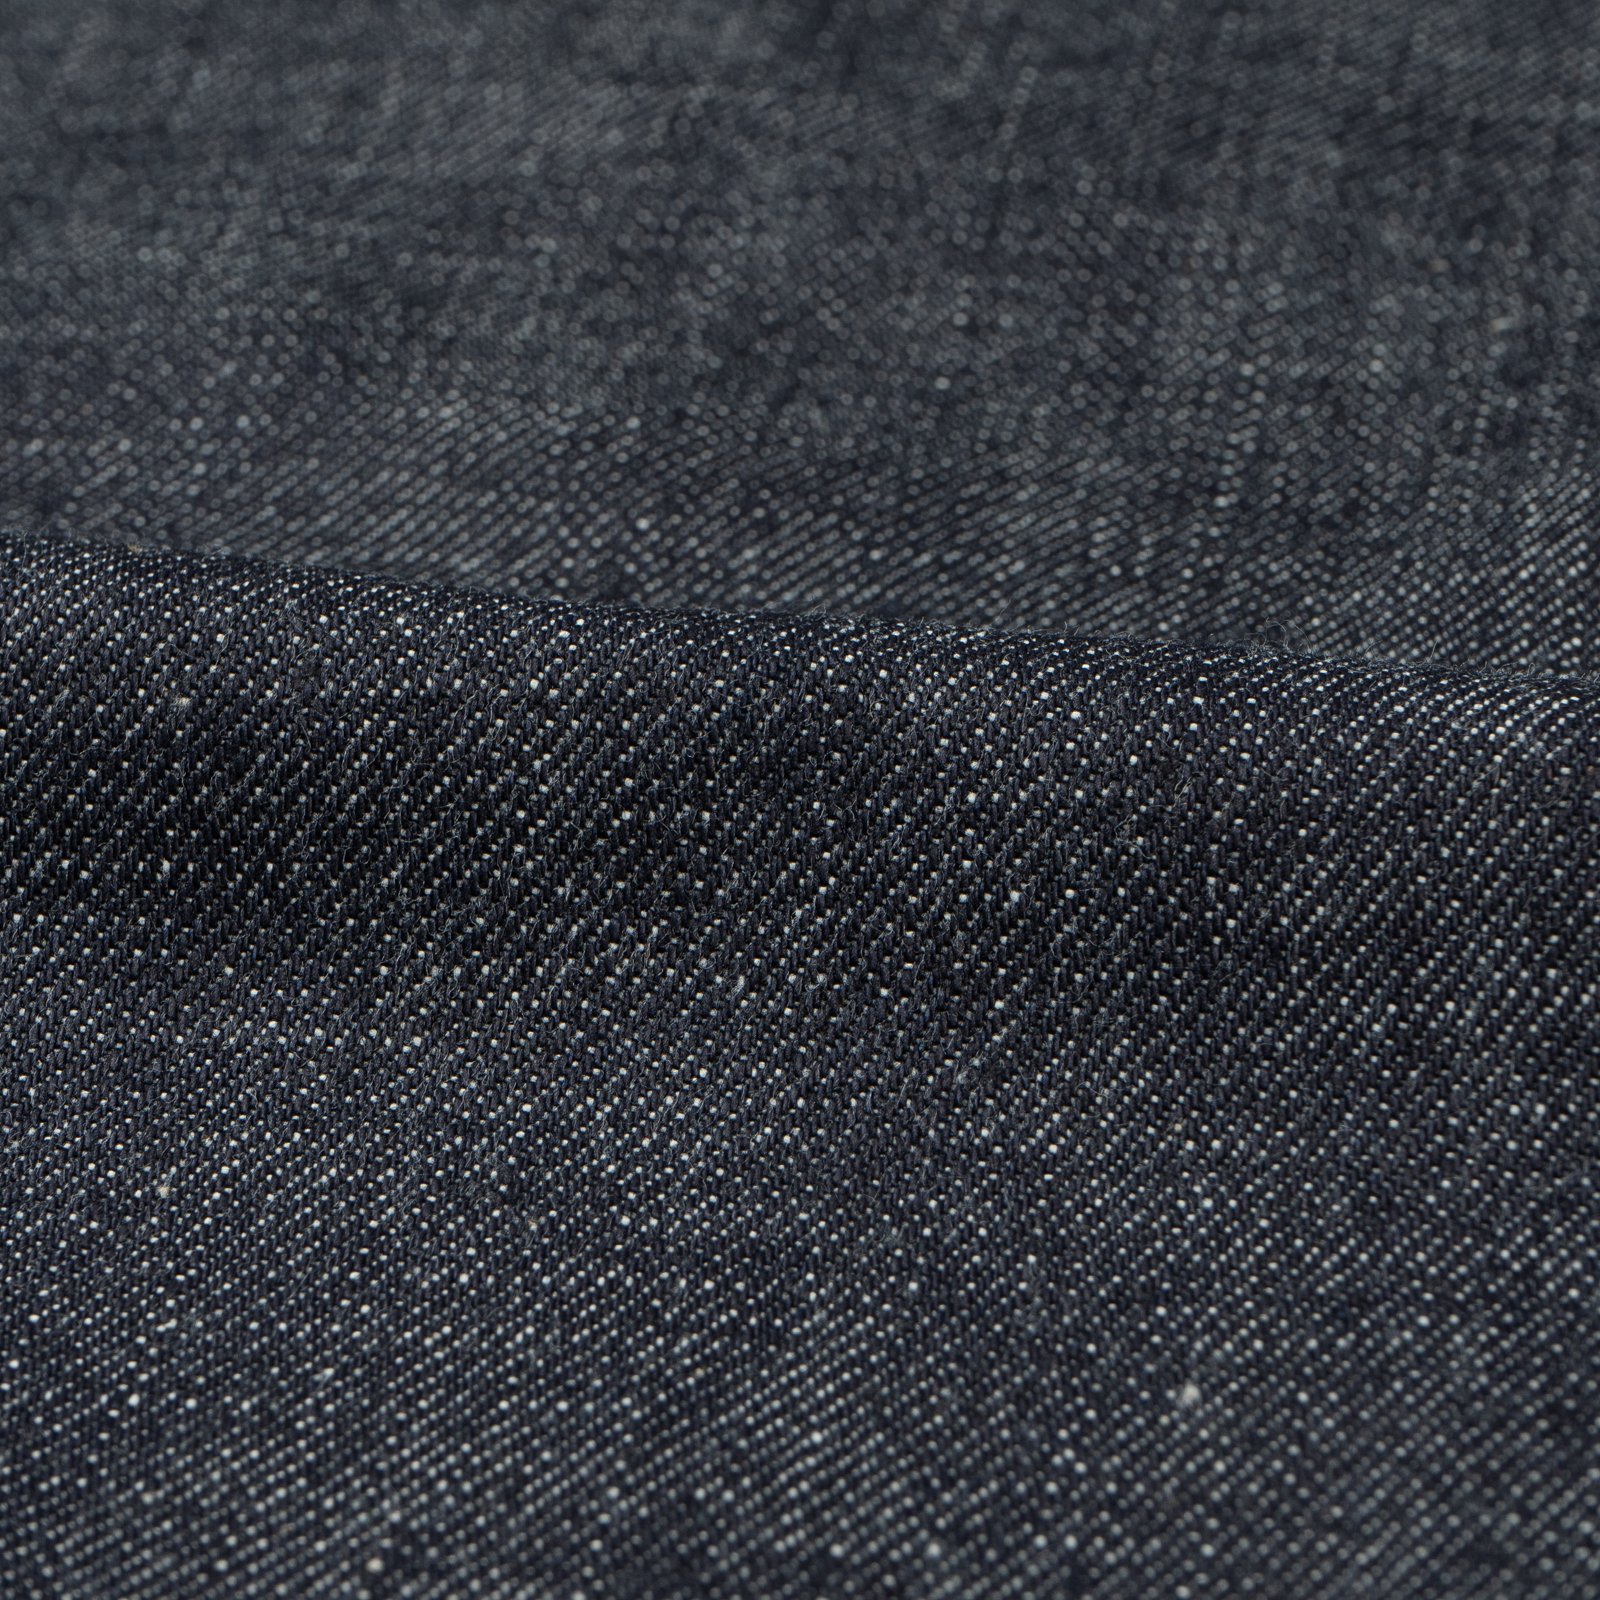  La Belle Province Selvedge jeans - fabric 